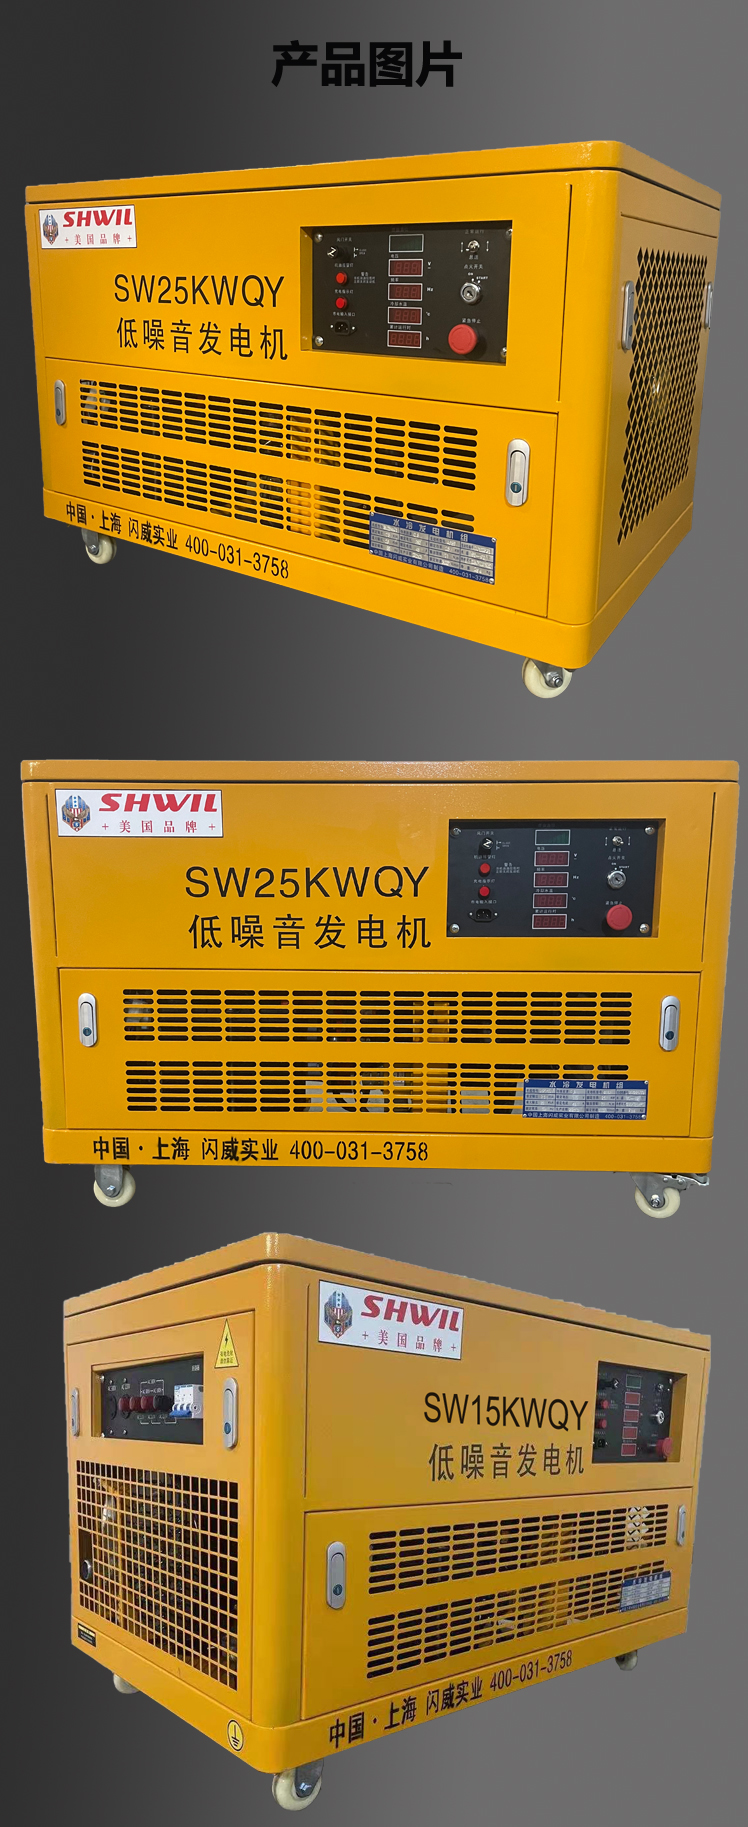 SHWIL 60KW静音汽油发电机三相 暴雨防汛 电启动